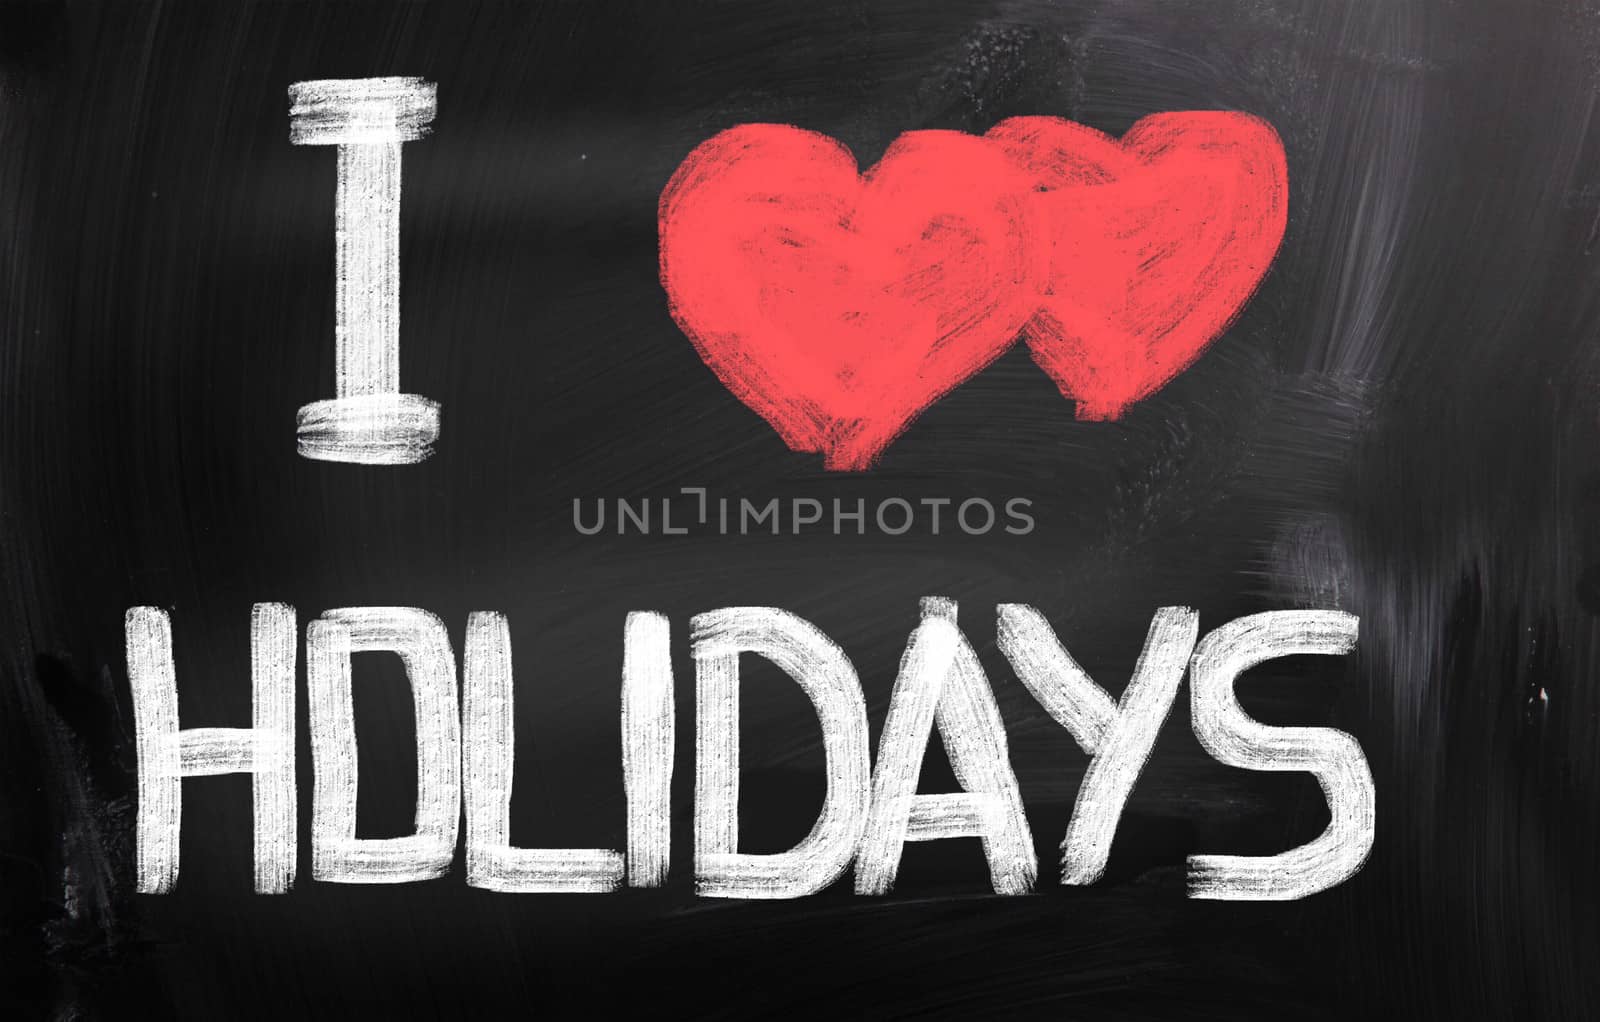 I Love Holidays Concept